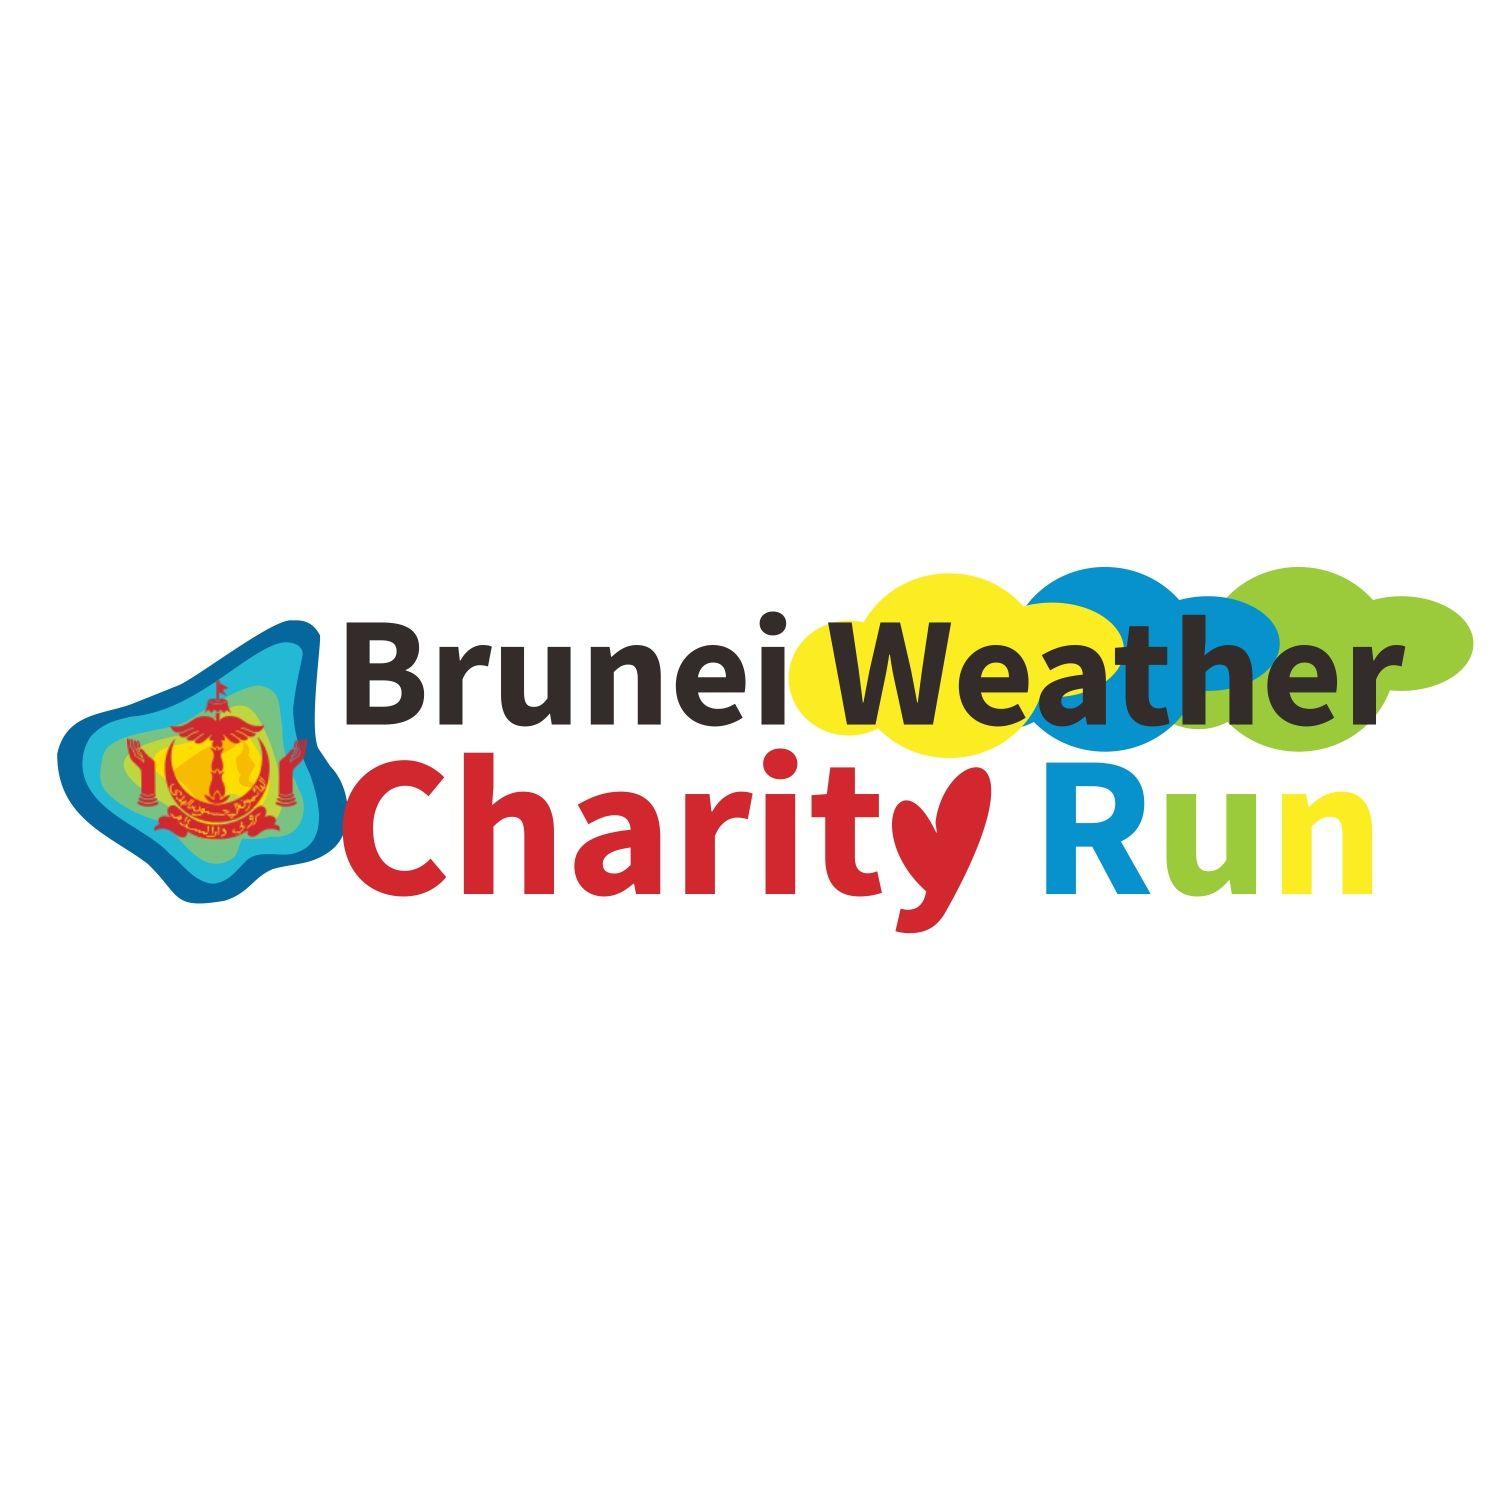 Brunei Logo - Modern, Professional, Charity Logo Design for Brunei Weather Charity